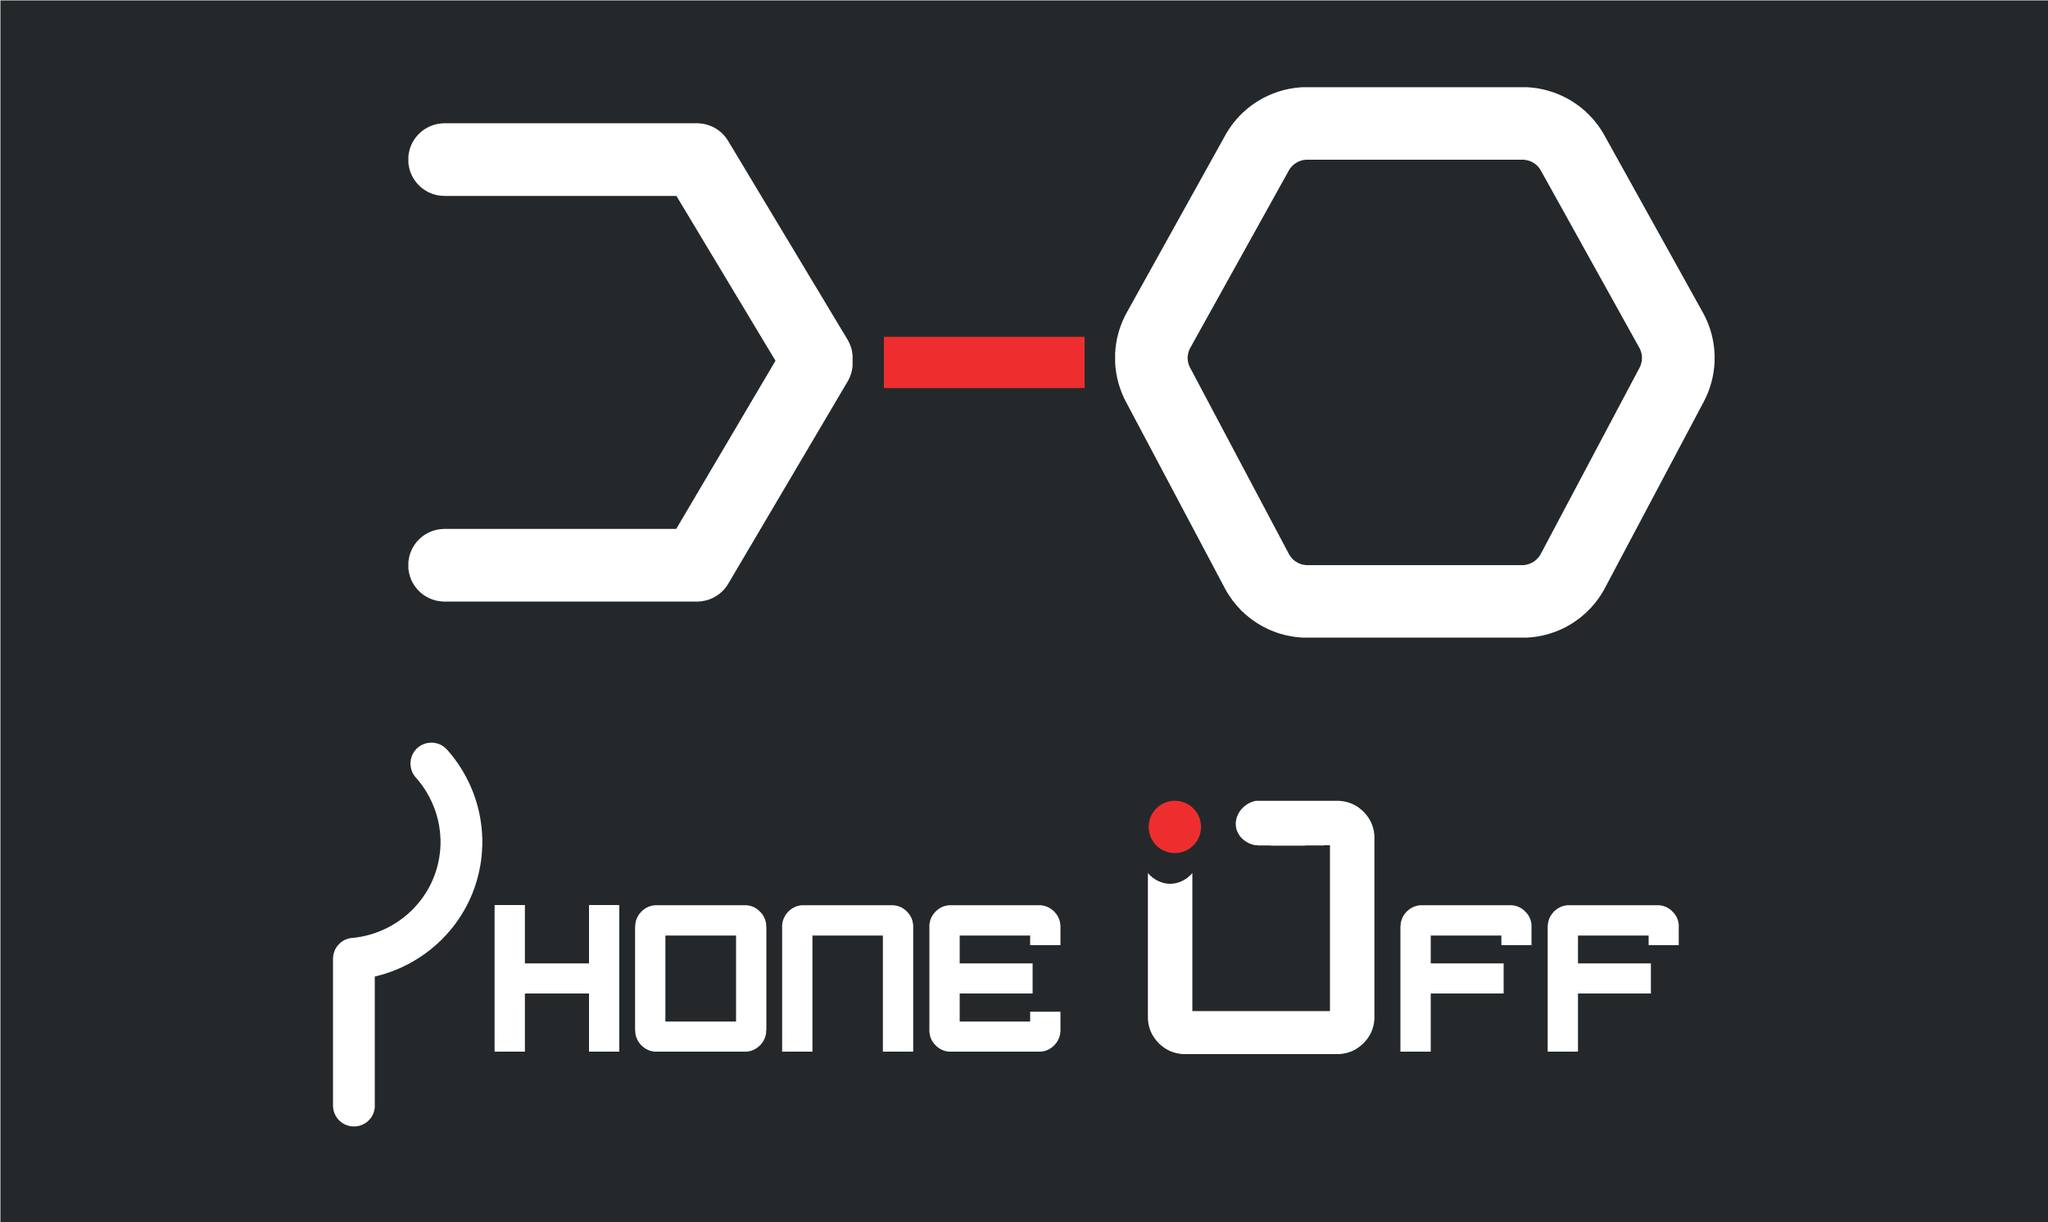 Phone Off